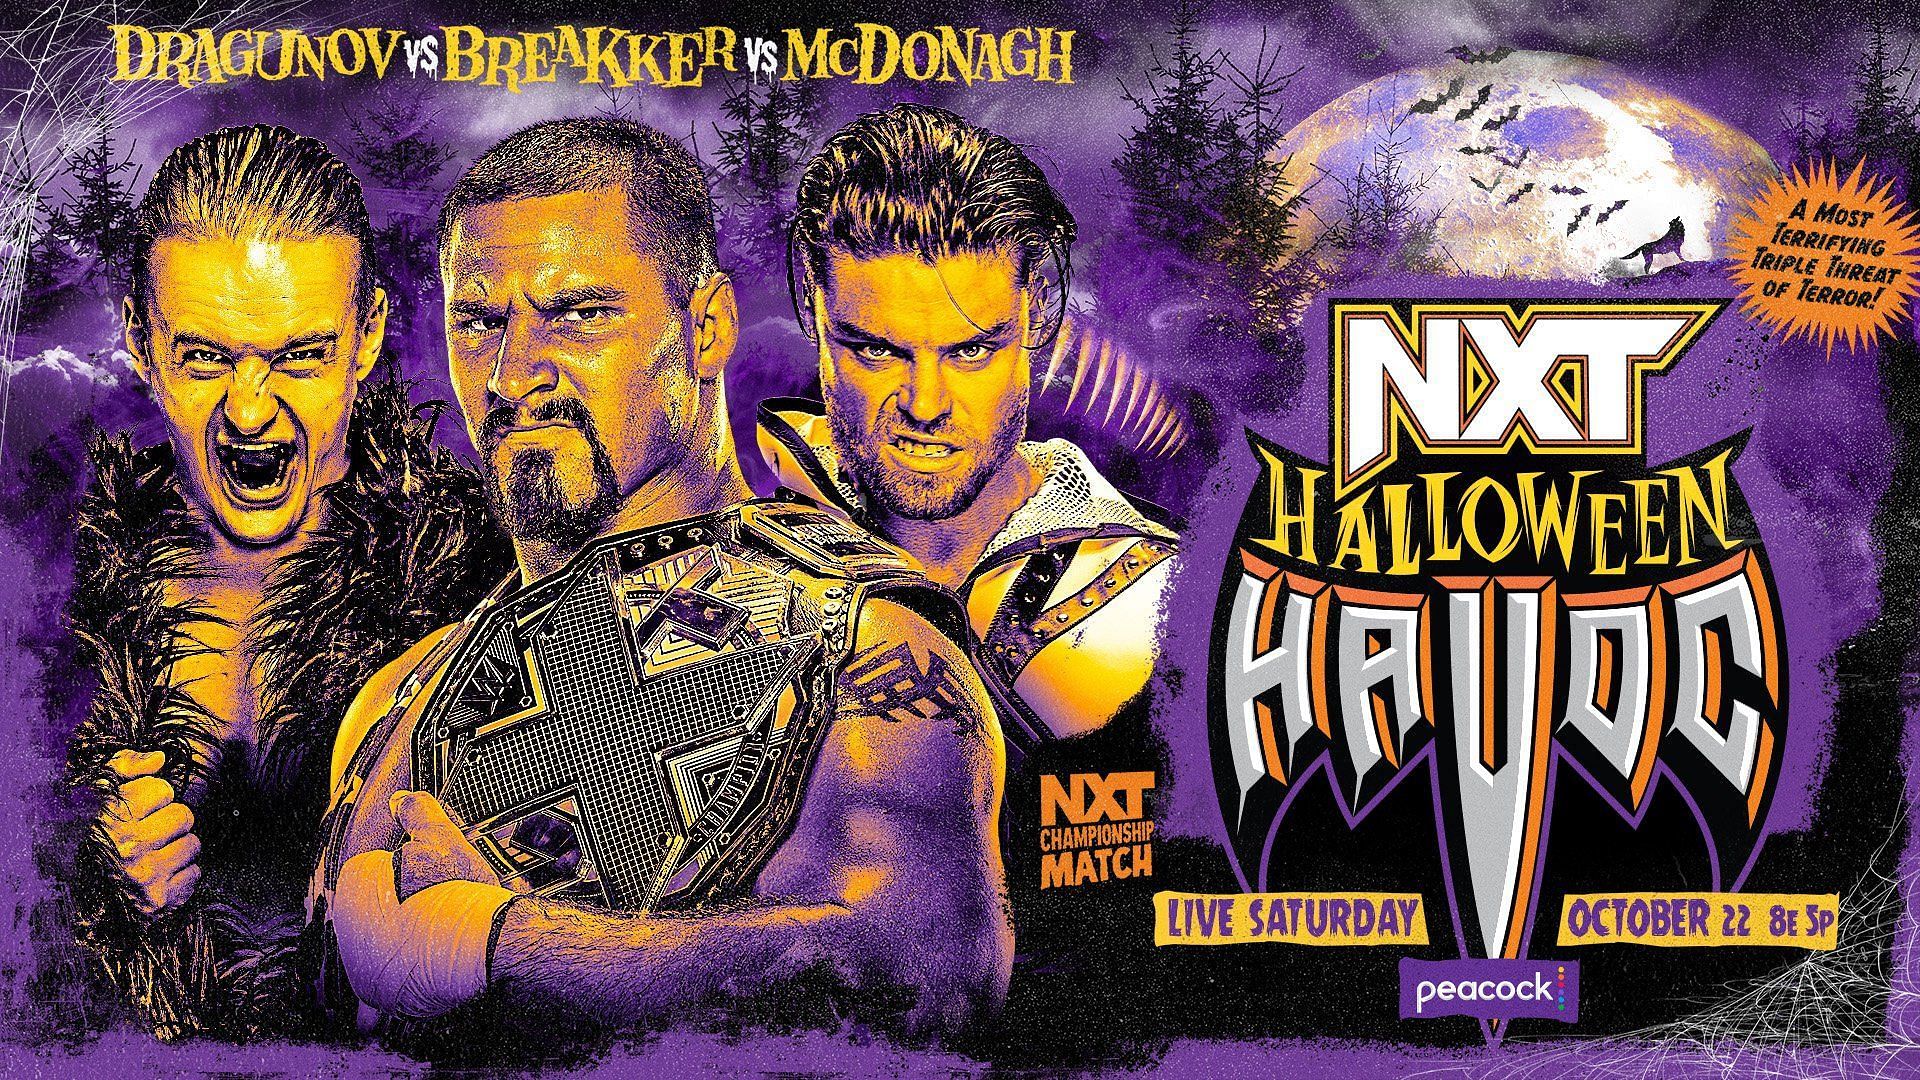 Halloween Havoc will see a hard-hitting NXT title match.